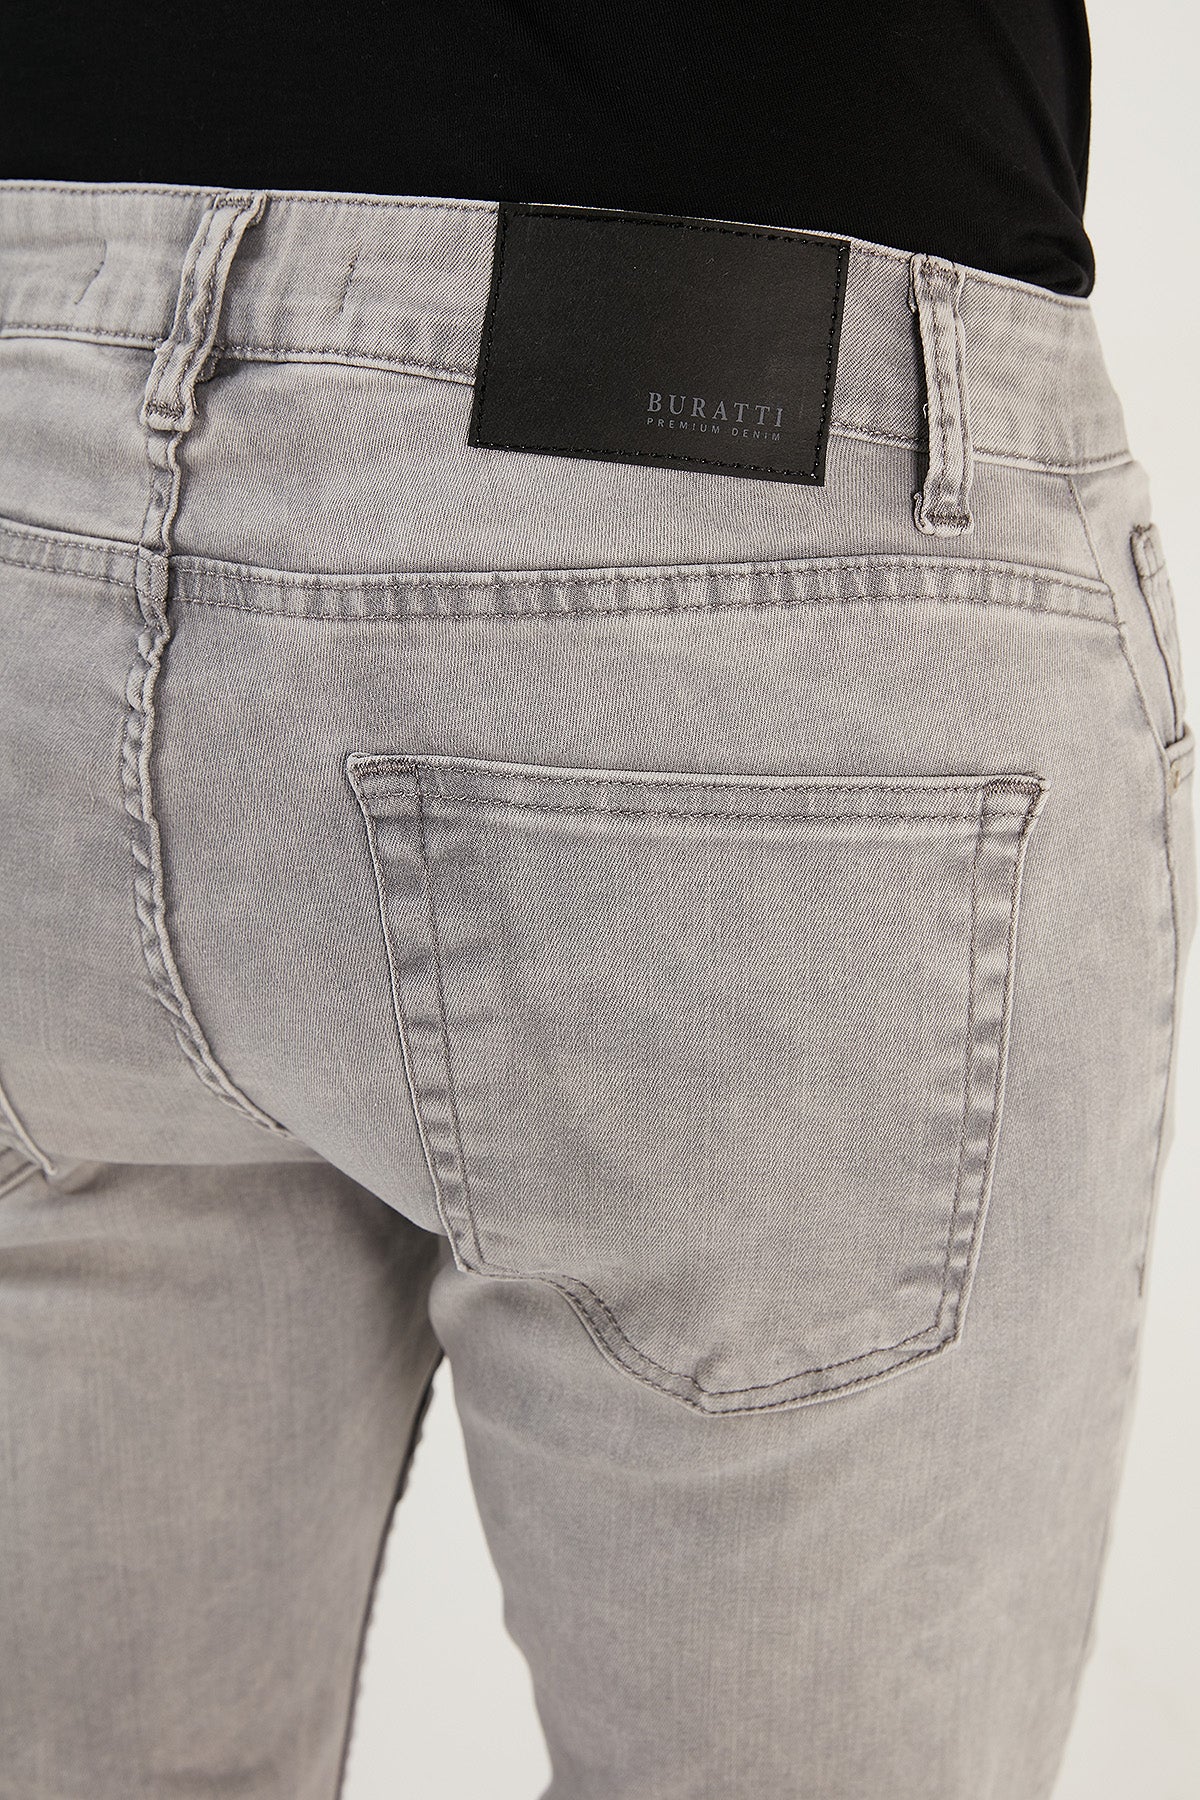 Buratti Pamuklu Normal Bel Slim Fit Dar Paça Jeans Erkek Kot Pantolon 1118M14NAPOLI GRİ